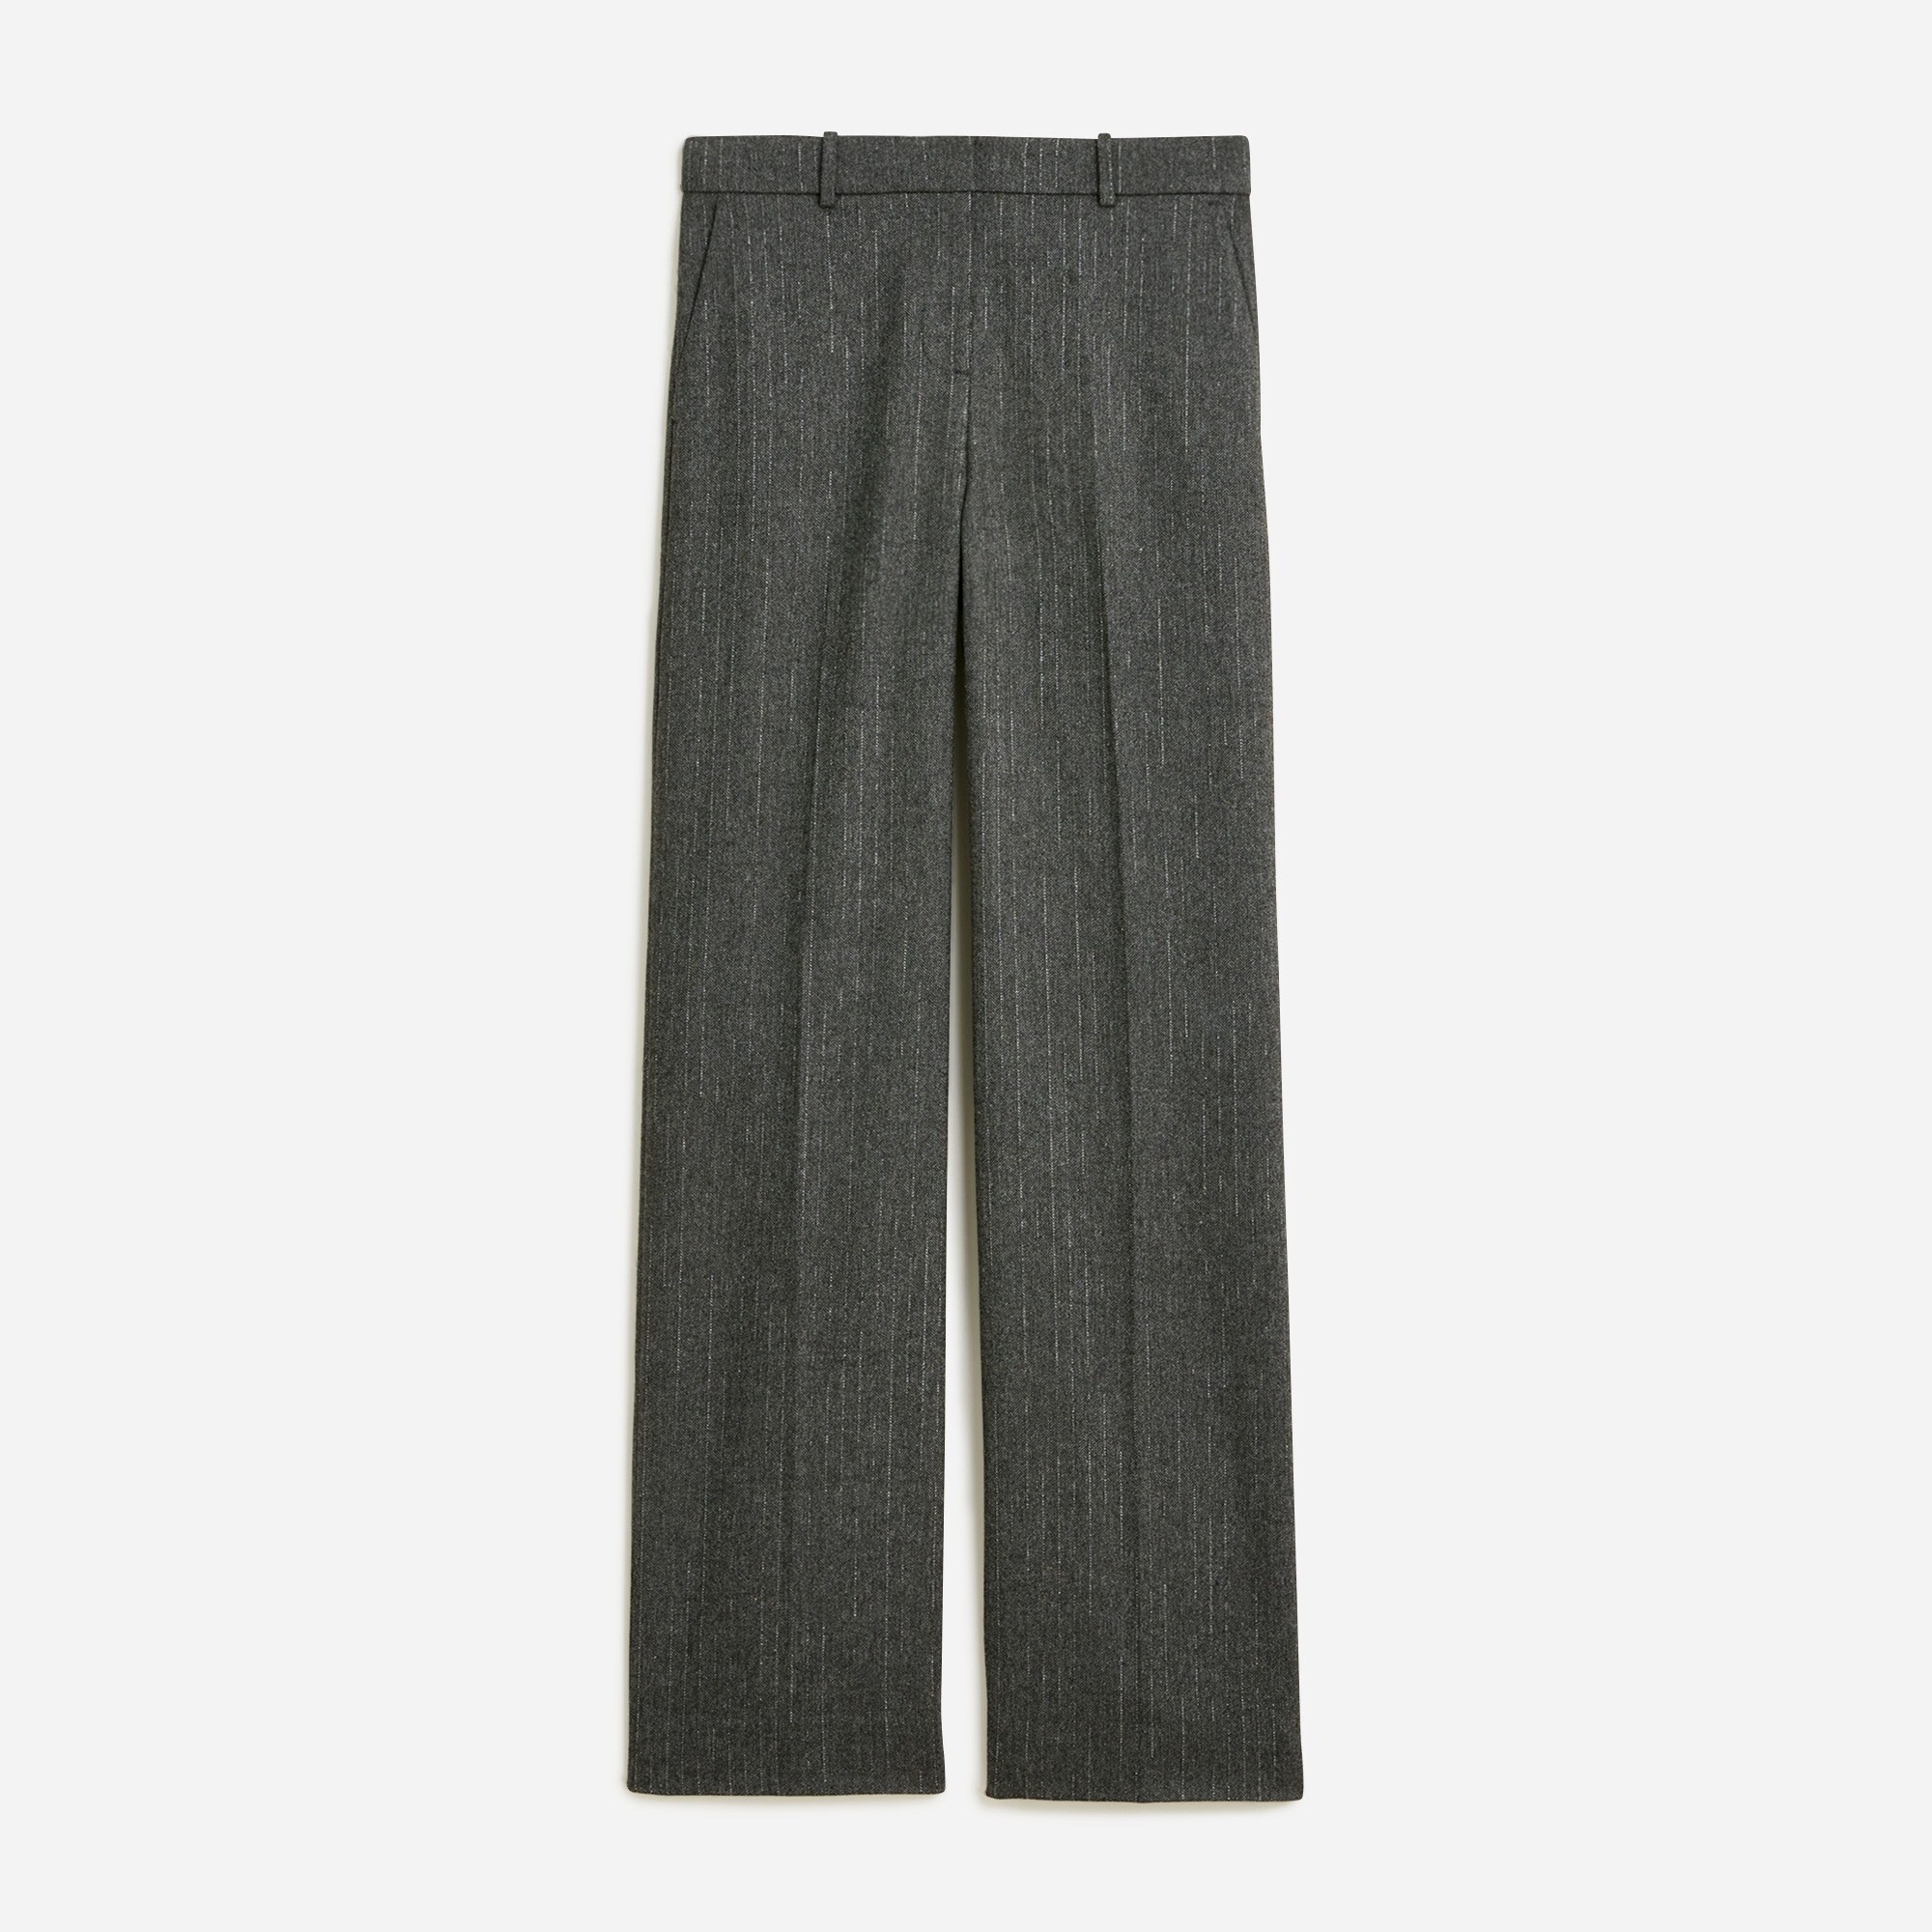  Collection full-length Sydney wide-leg pant in pinstripe Italian wool blend with Lurex&reg; metallic threads